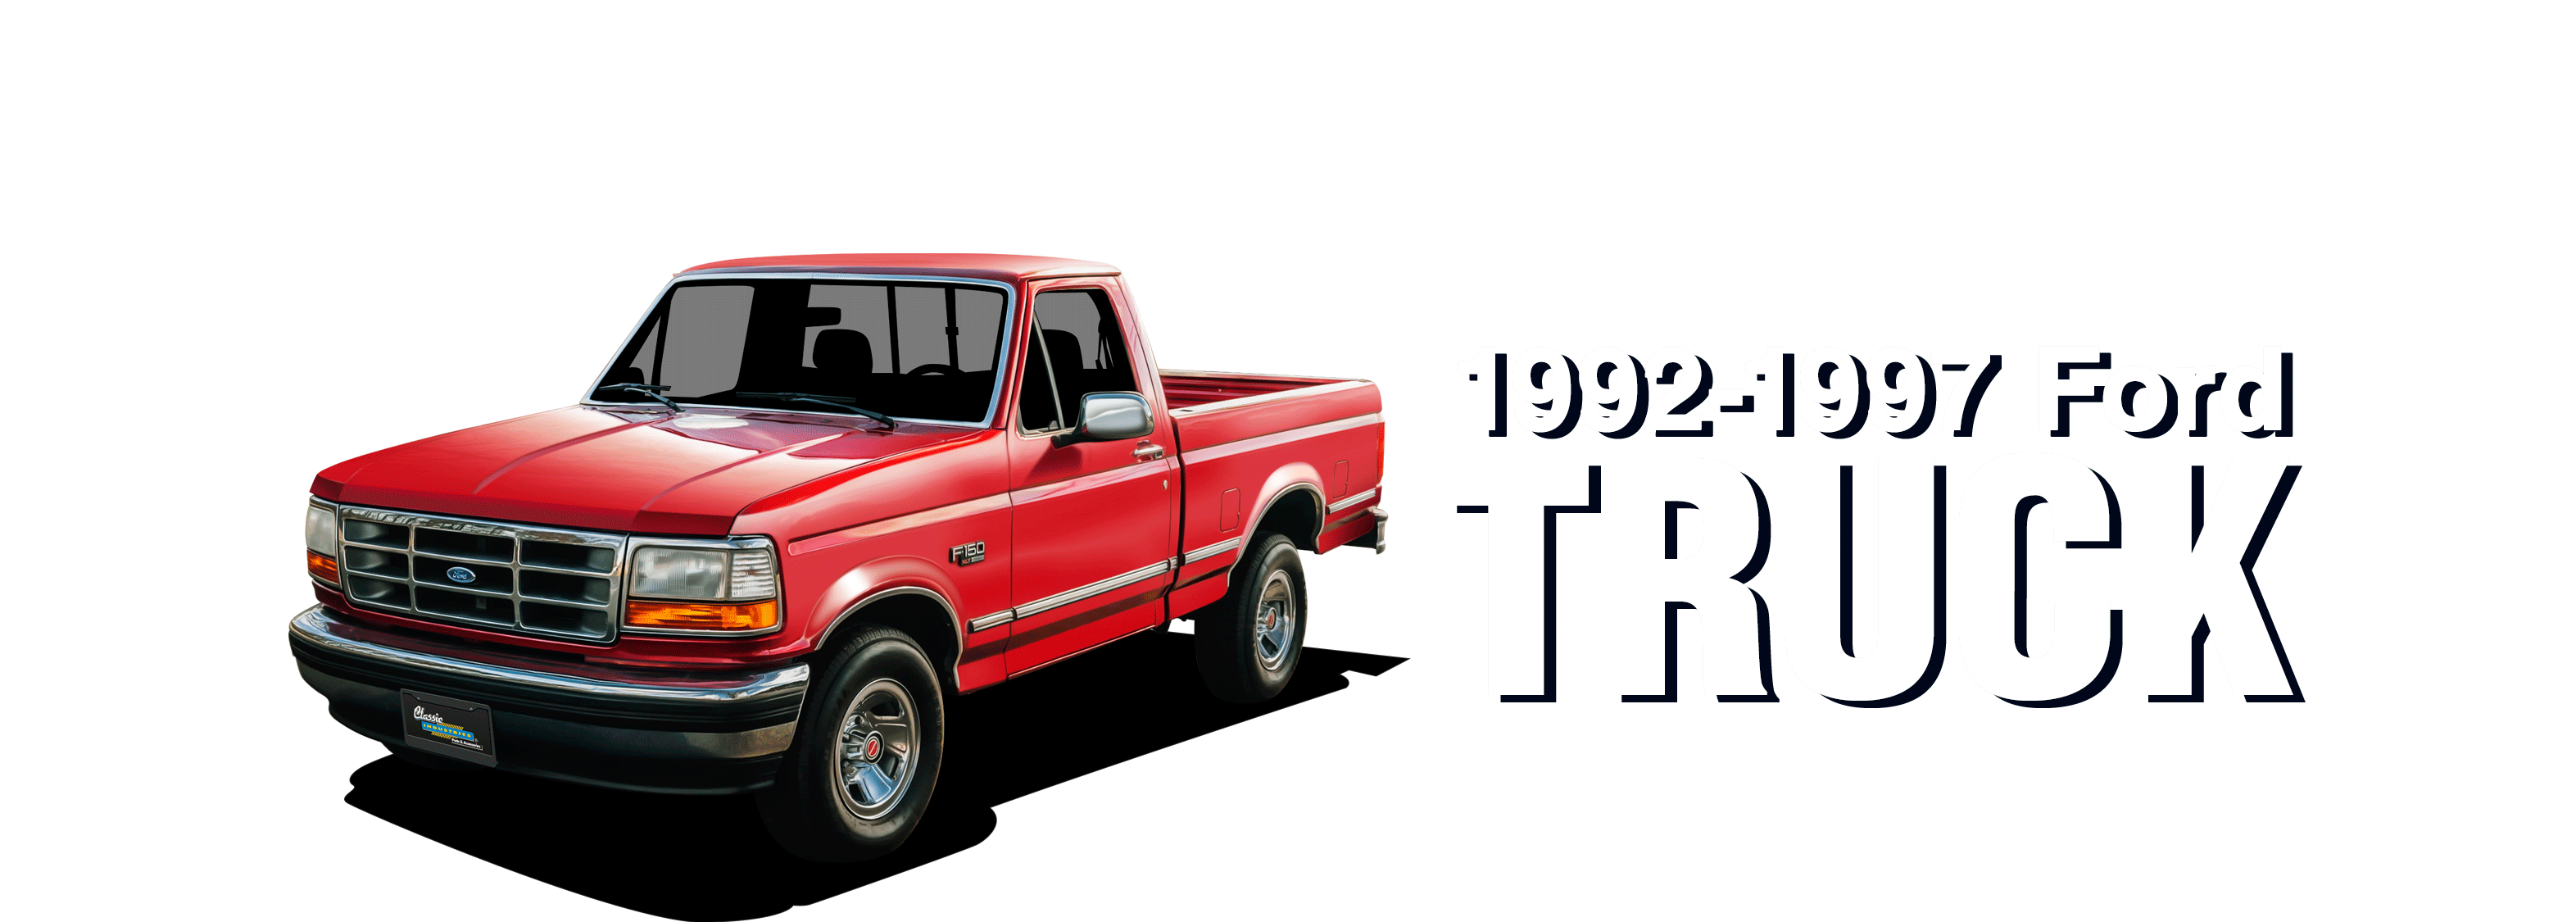 92-97FordTruck-vehicle-desktop